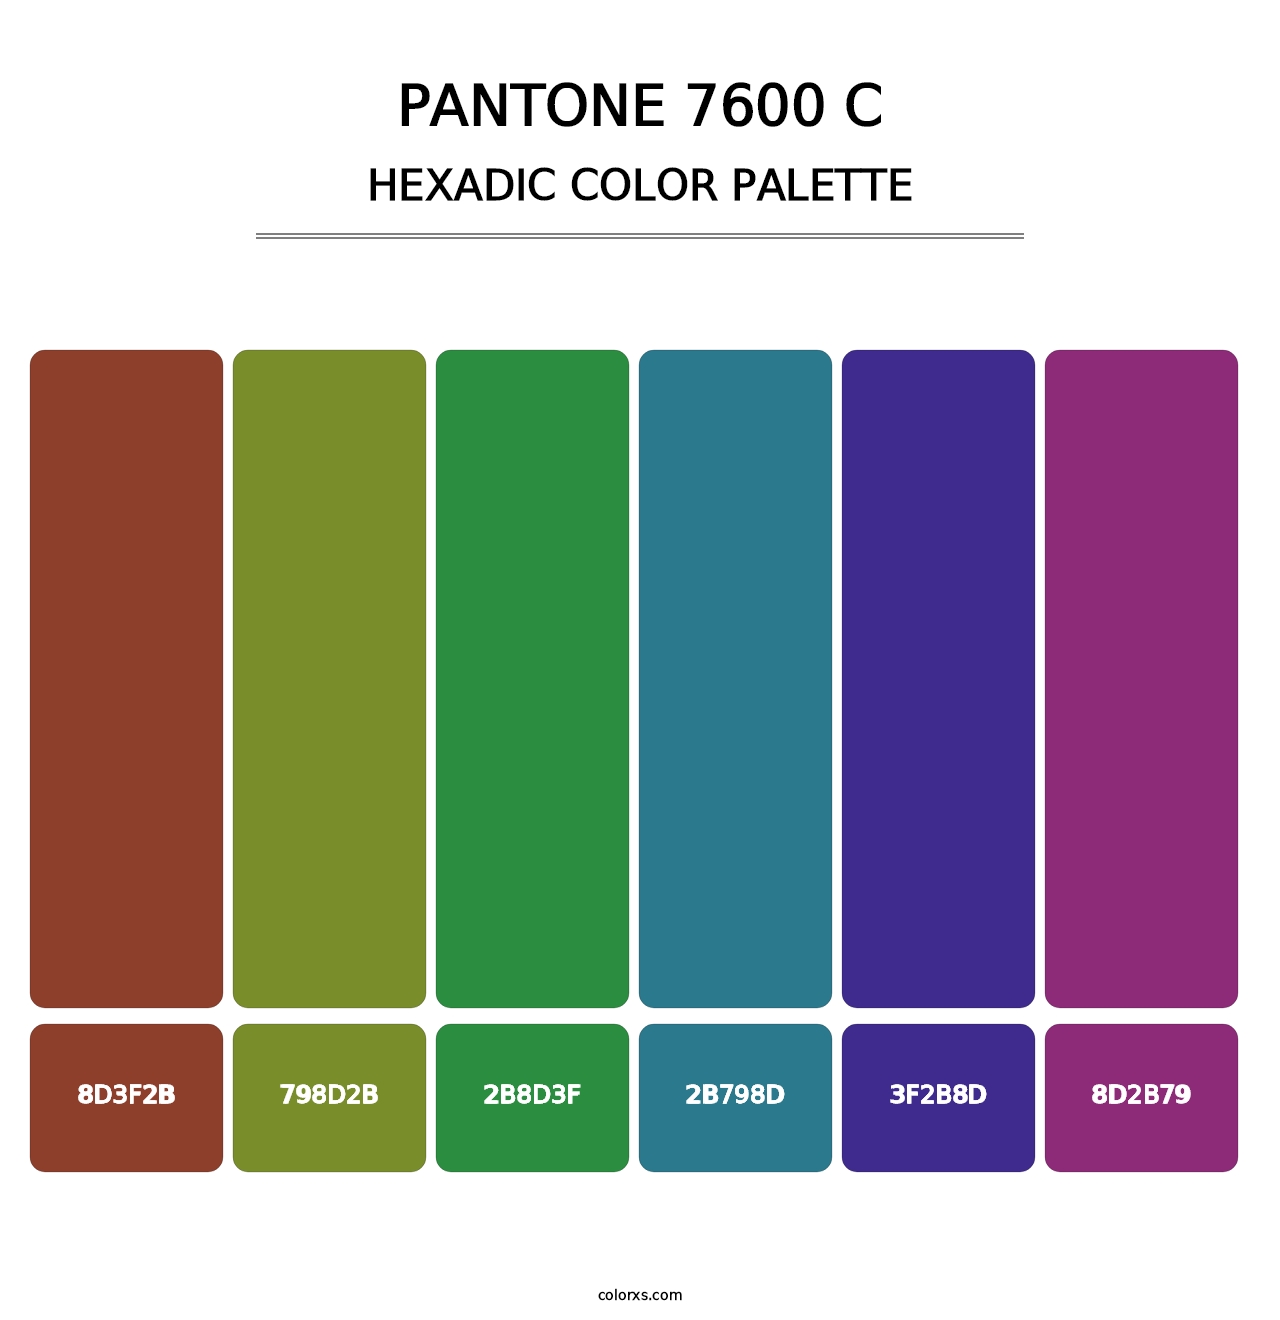 PANTONE 7600 C - Hexadic Color Palette